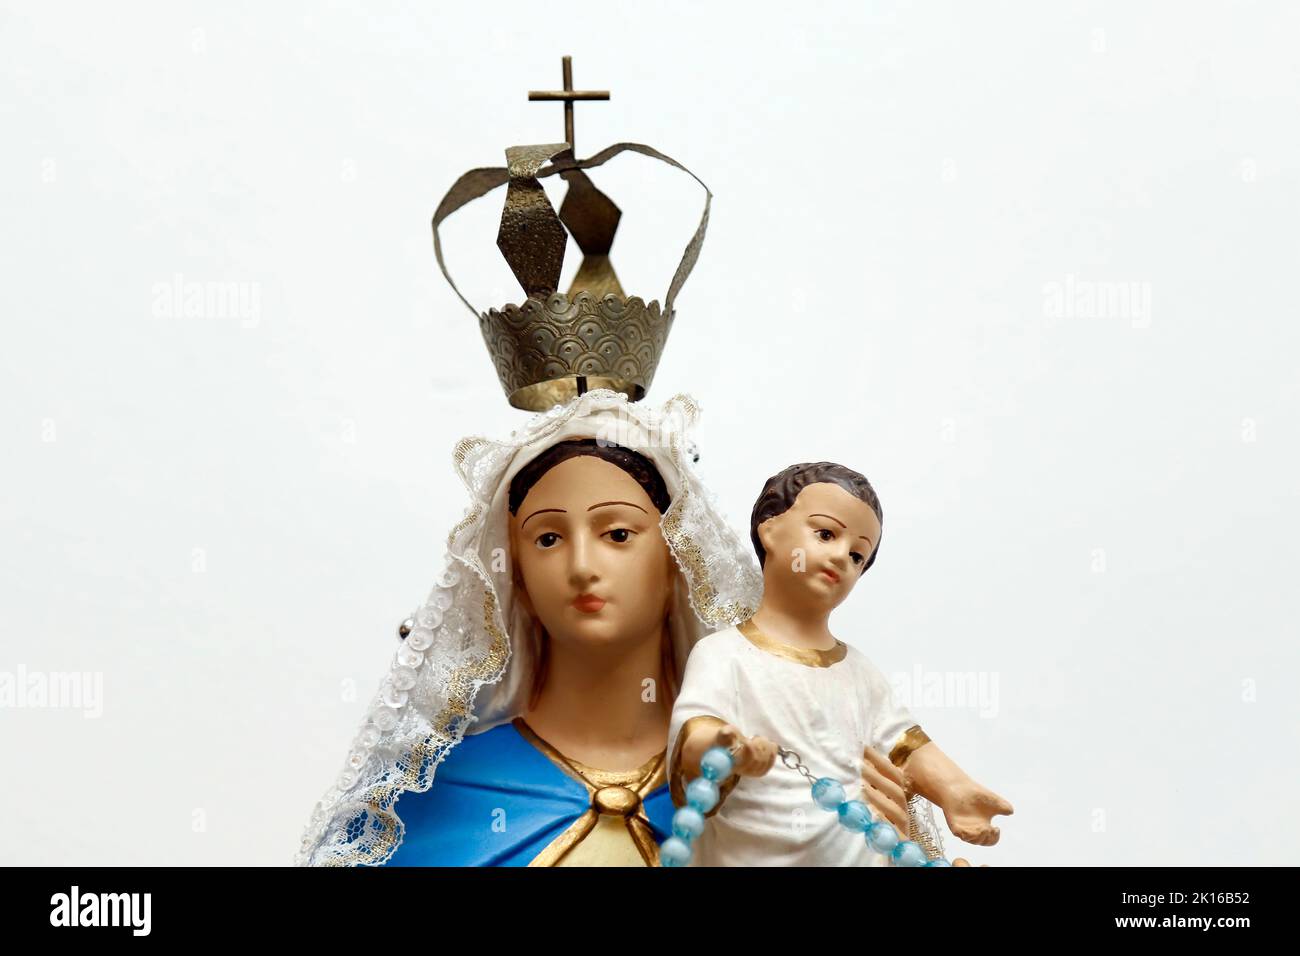 Statue of the image of Our Lady of Rosary Pompeii with baby Jesus, detail - Nossa Senhora do Rosario de Pompeia Stock Photo